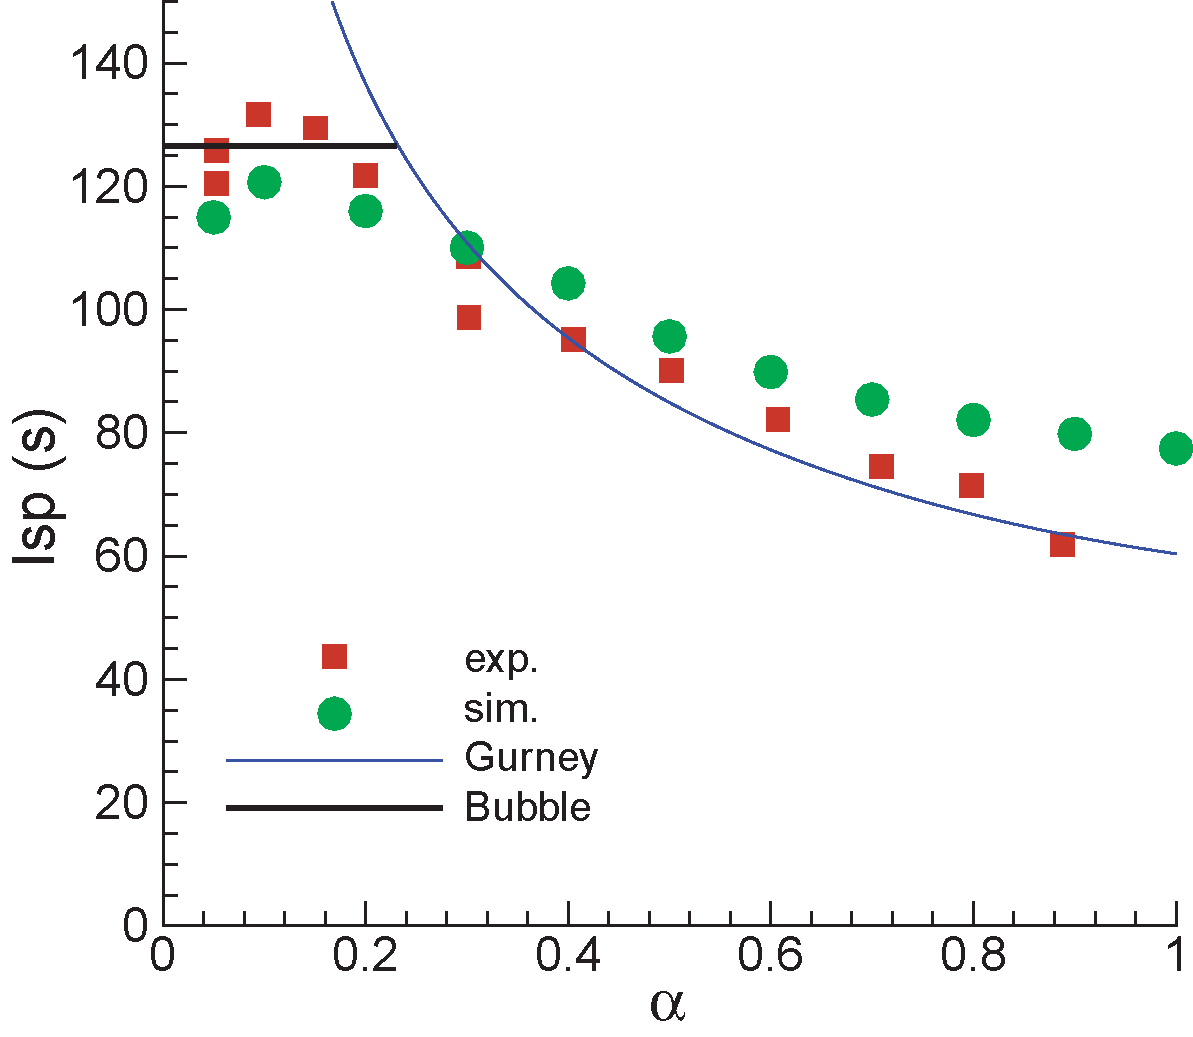 Impulse vs. filling ratio for P0/Pa =9.38, Helium/Air.